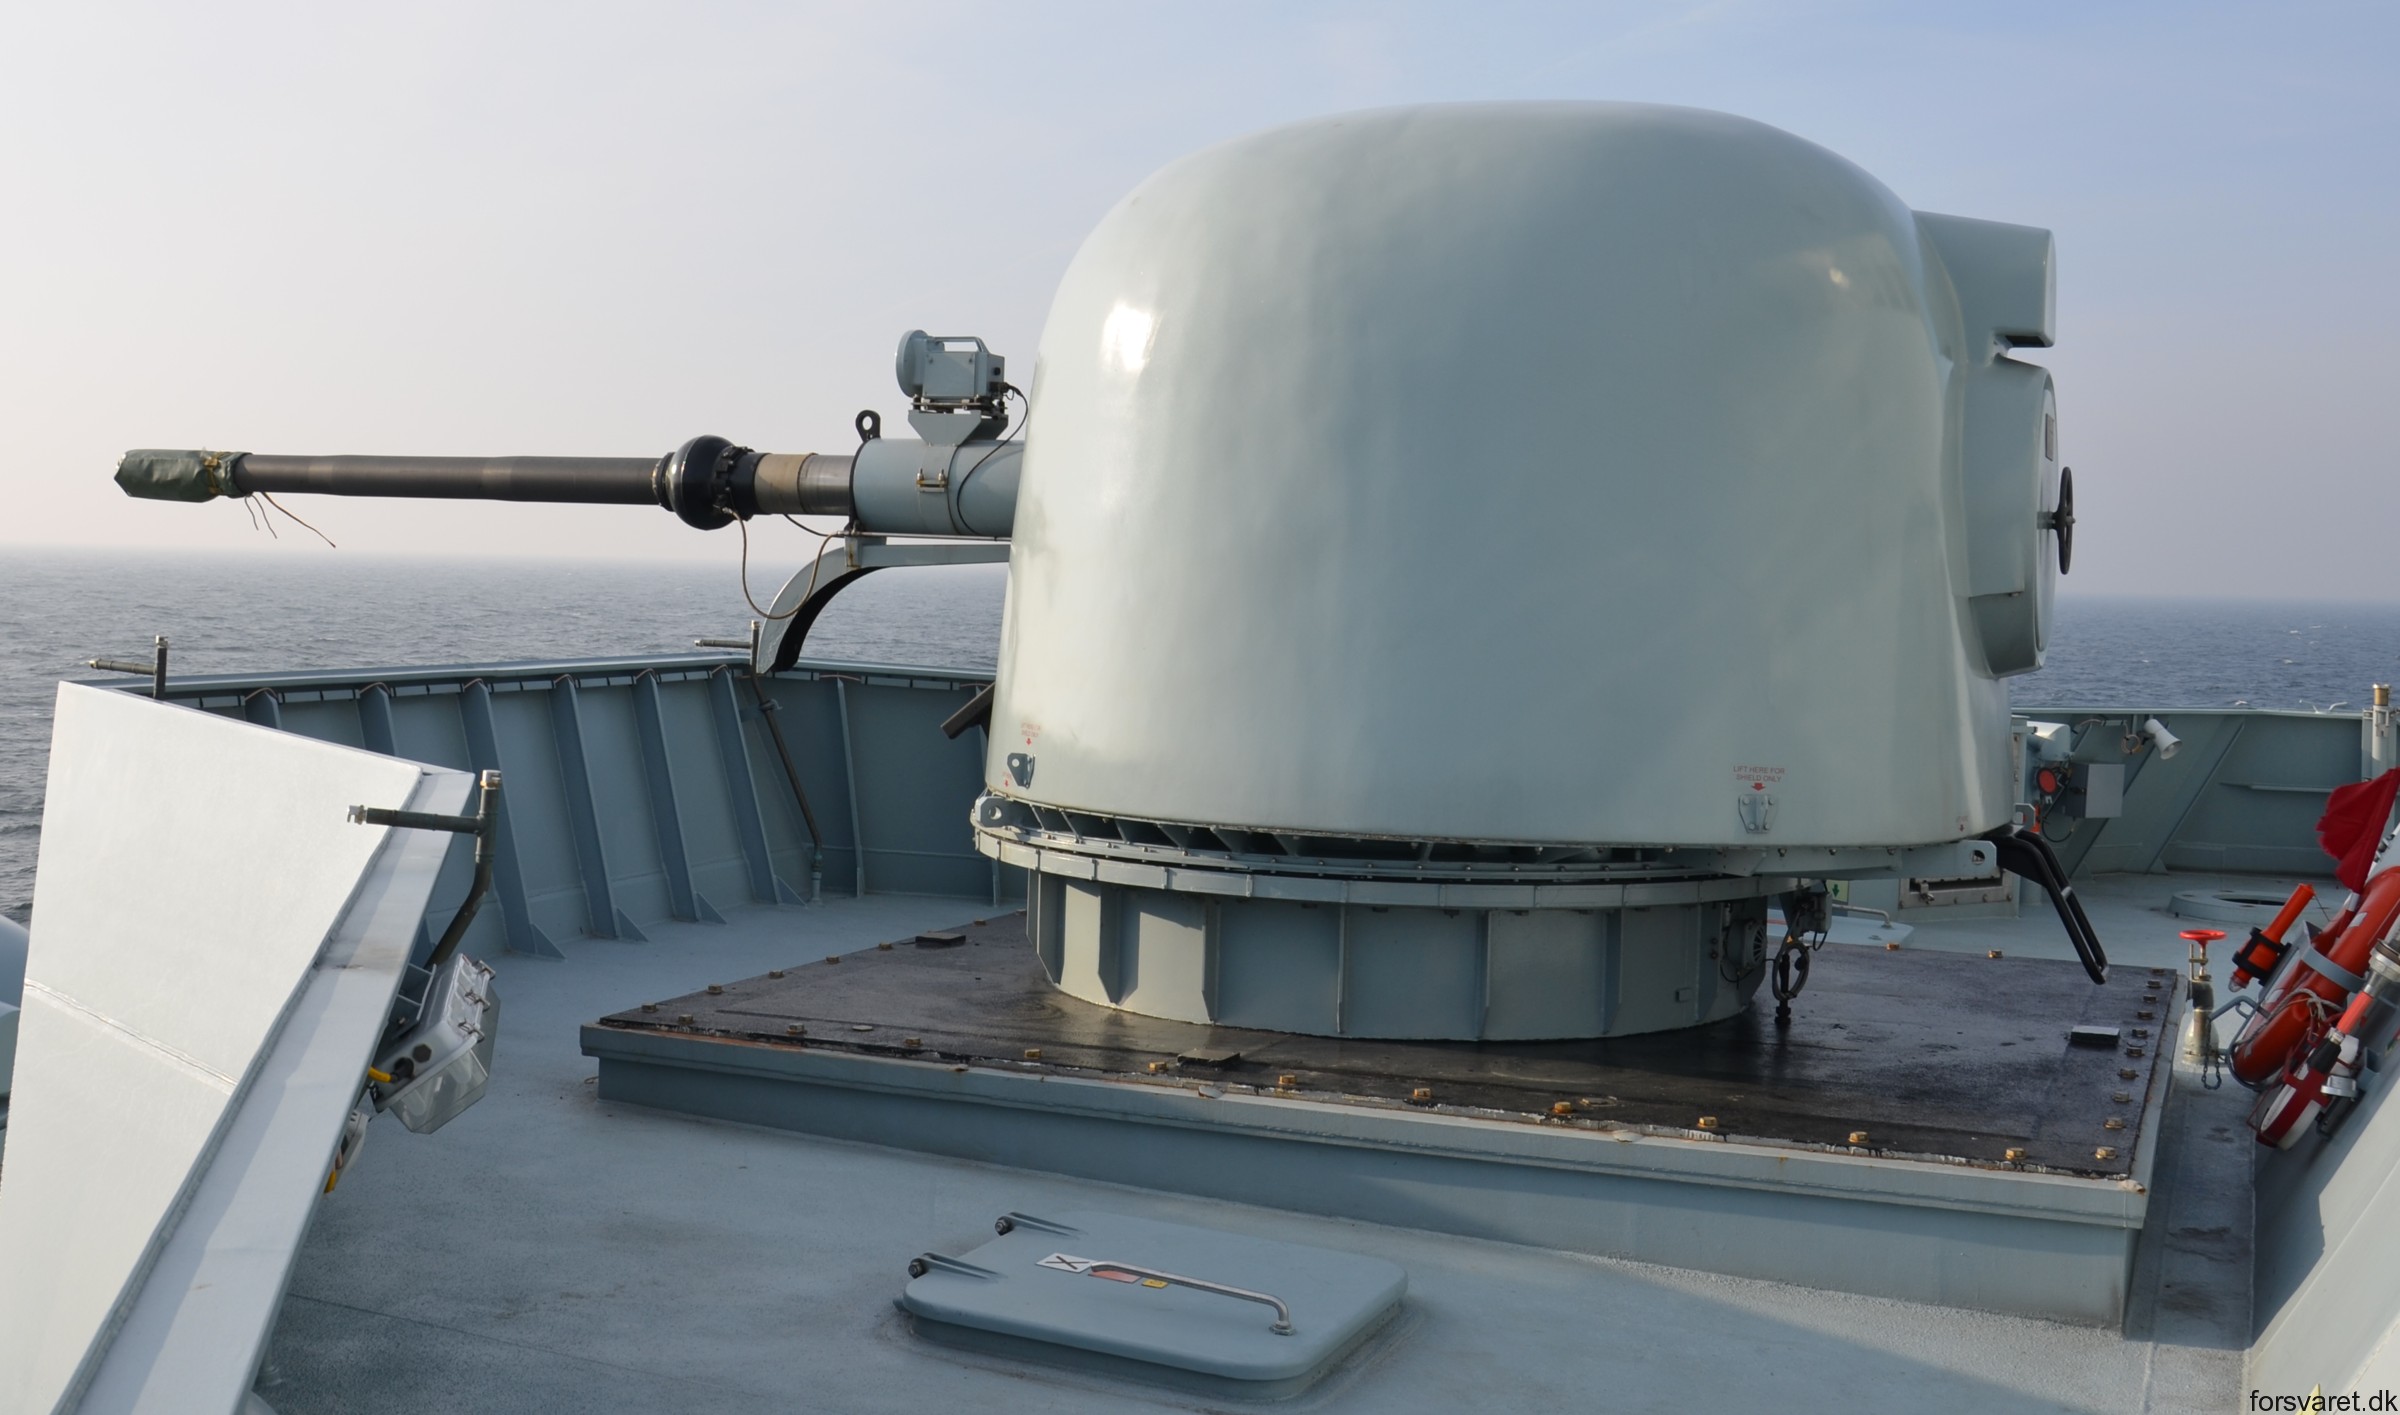 iver huitfeldt class guided missile frigate royal danish navy 37x oto-melara 76mm 62-caliber gun